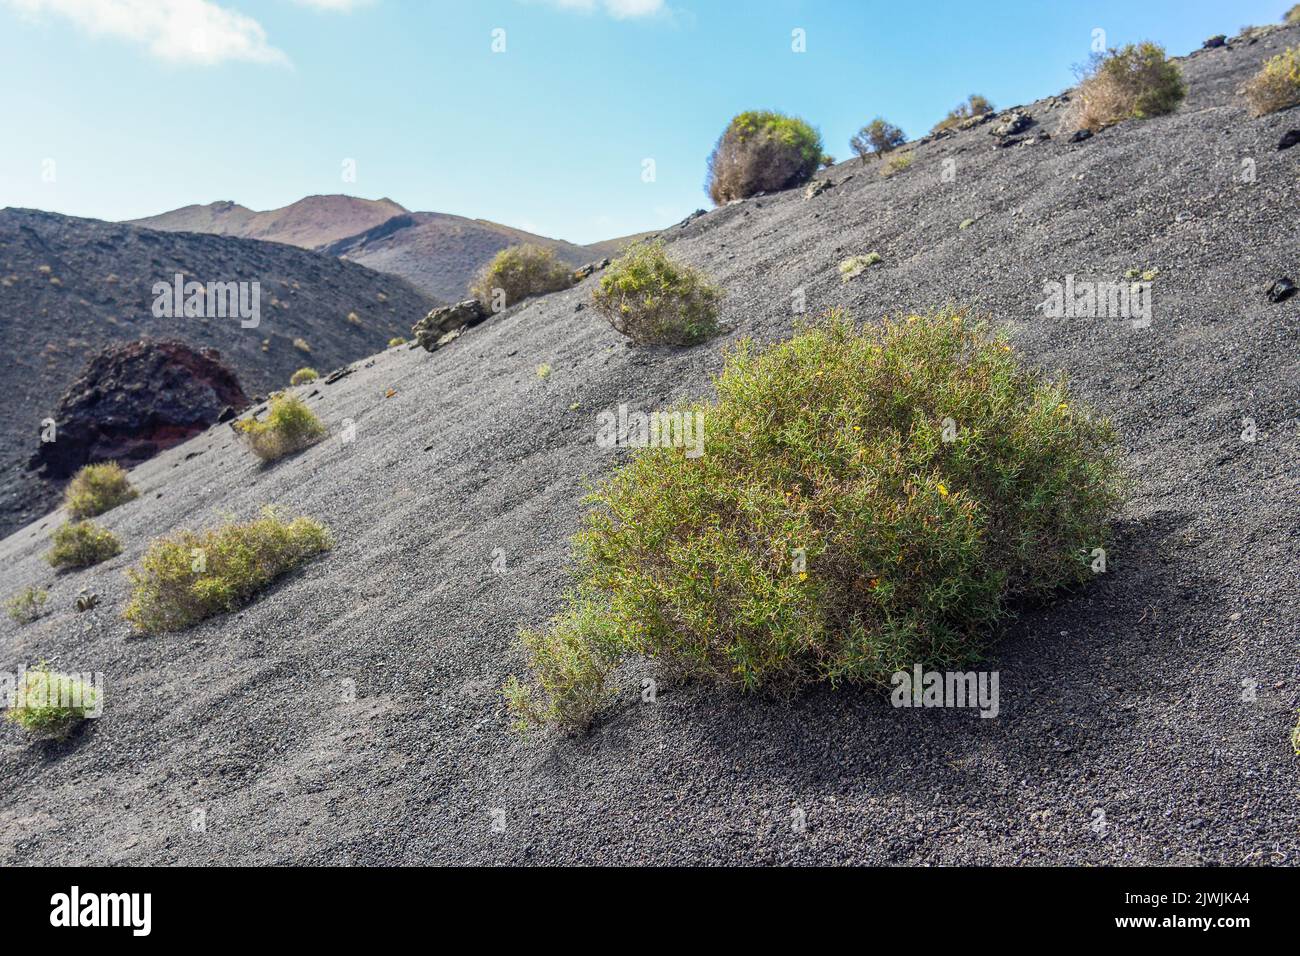 Launaea arborescens growing isolated among the lava of the Timanfaya volcanoes Stock Photo